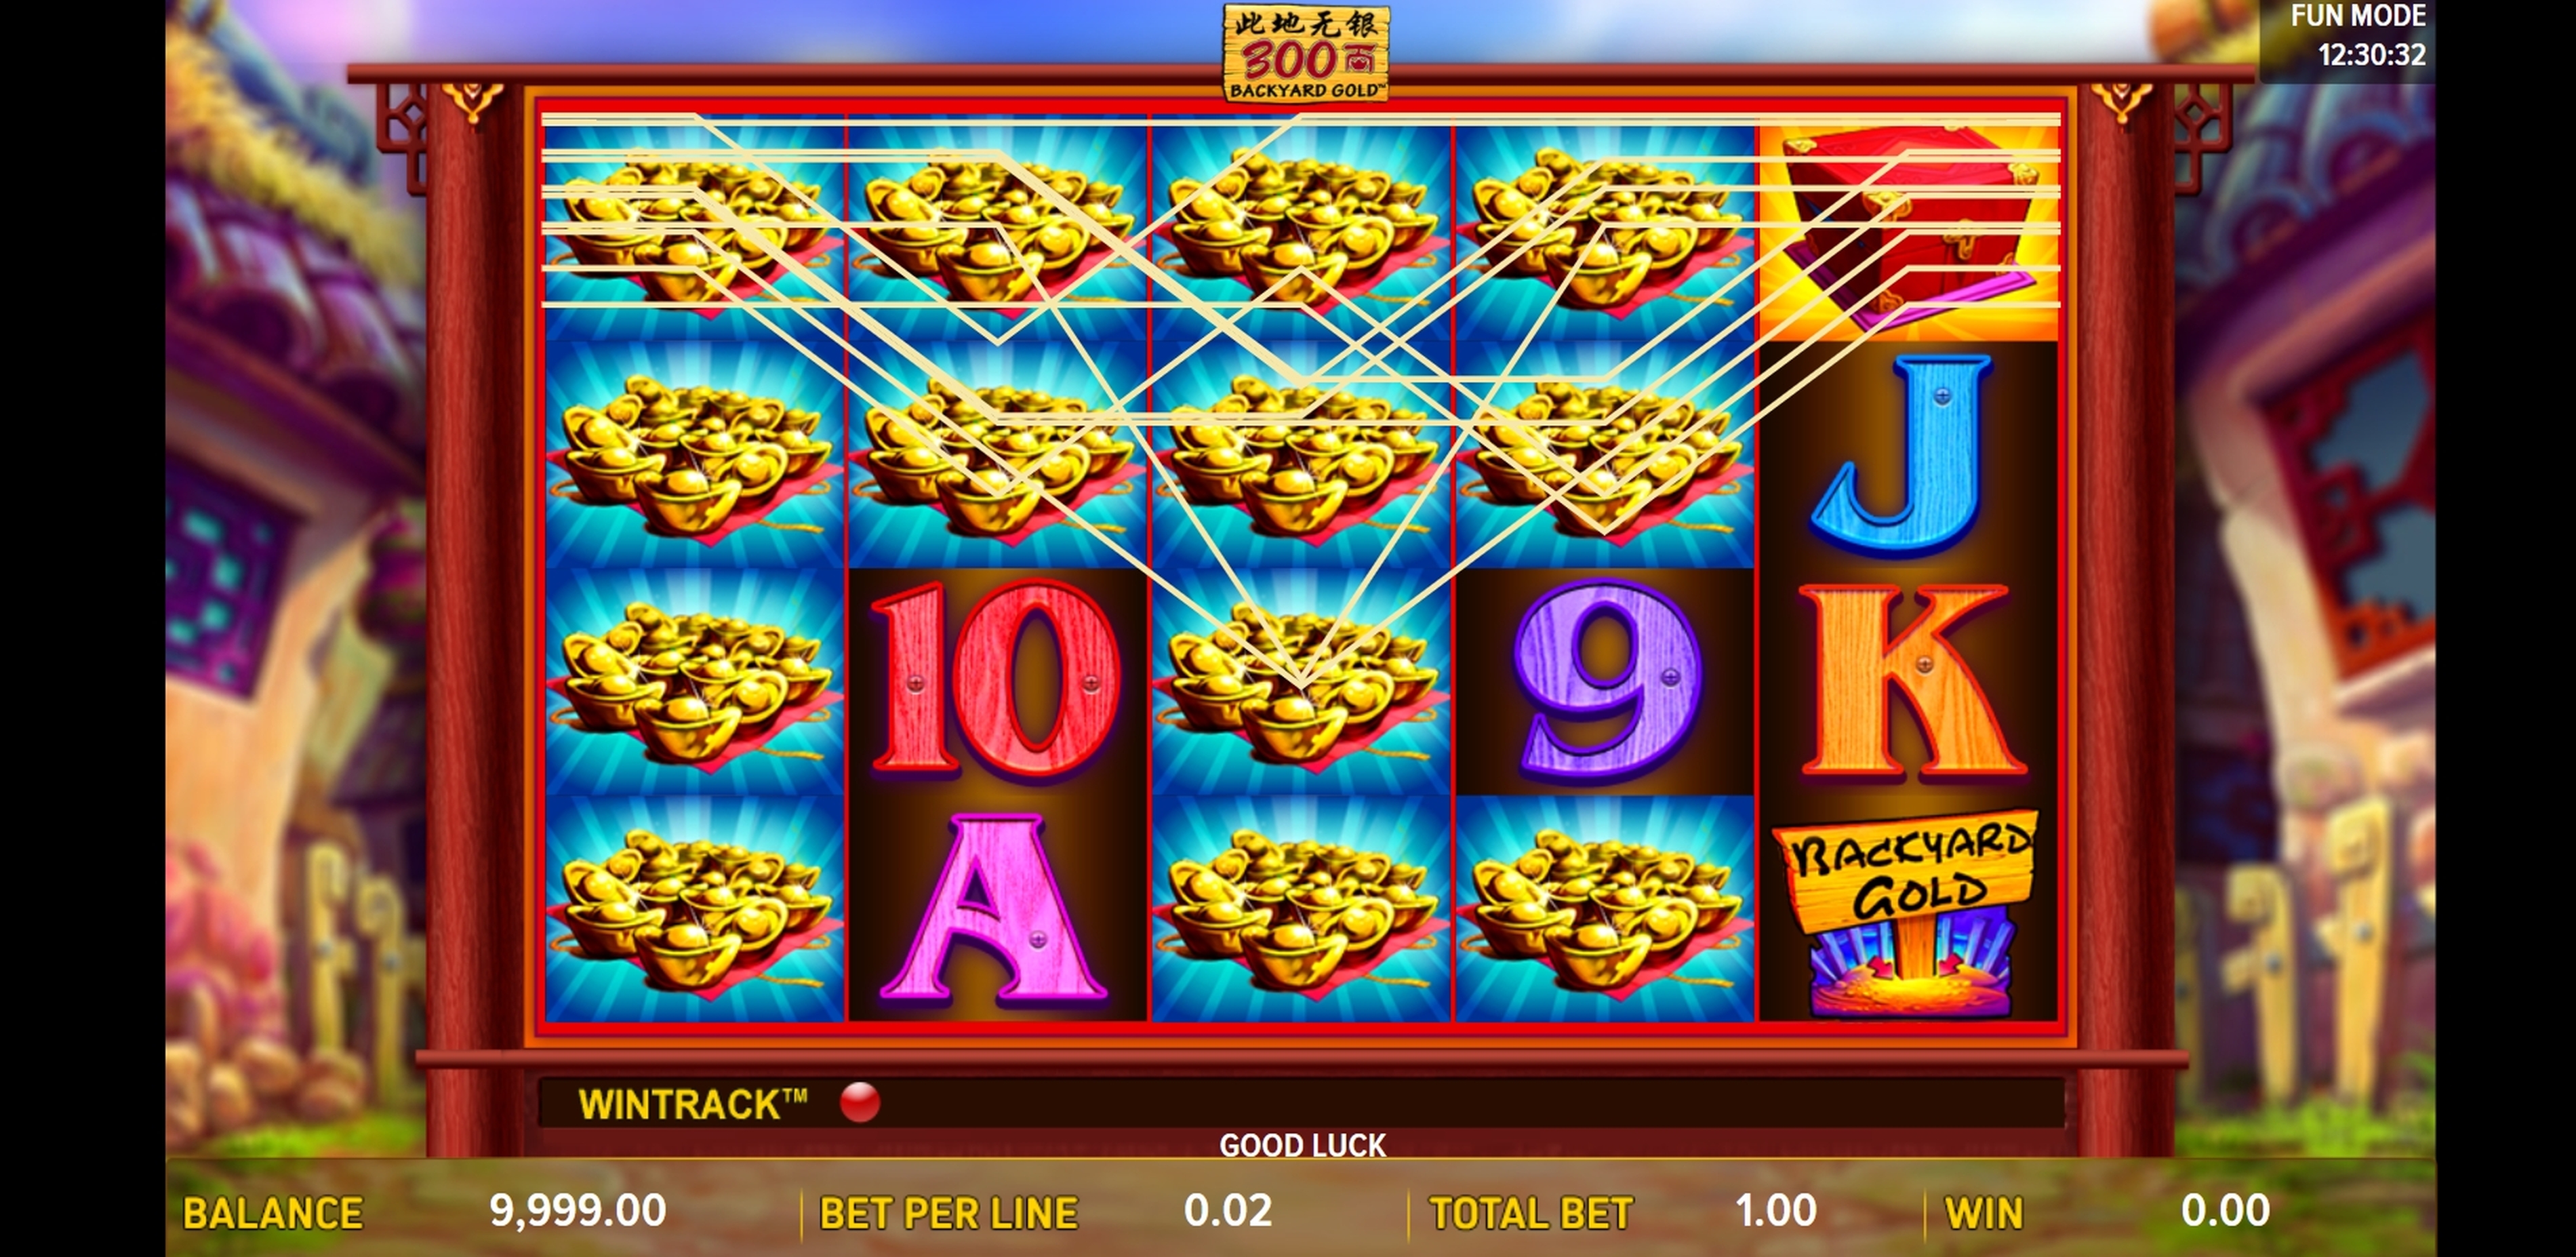 Win Money in Backyard Gold Free Slot Game by Gameiom